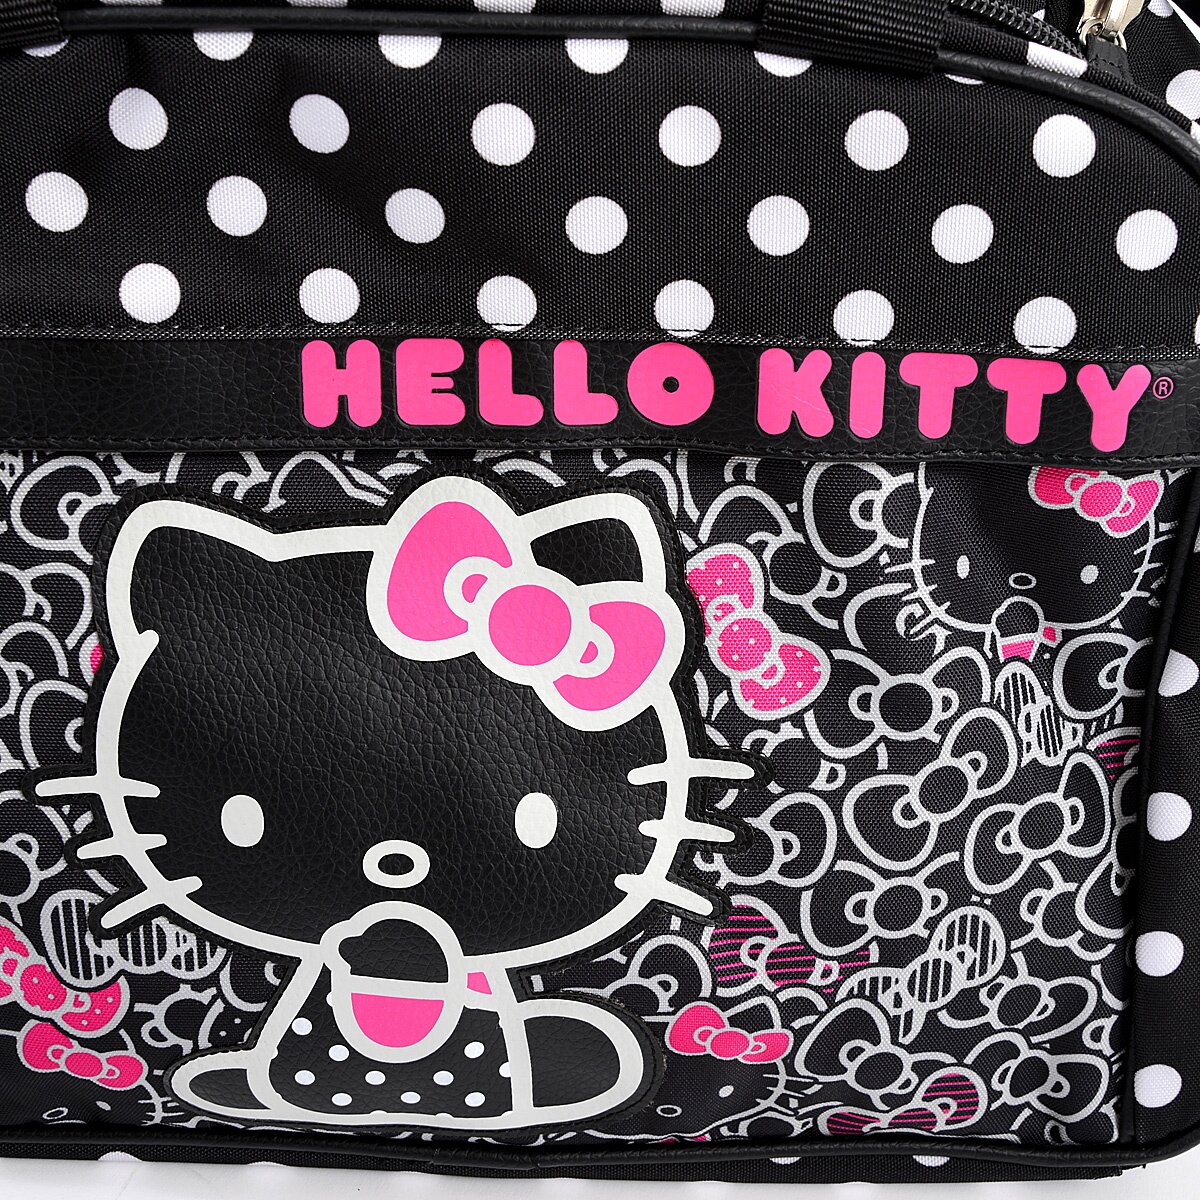 HELLO KITTY Messenger Bag Multi Print Bows Bundle · Trends